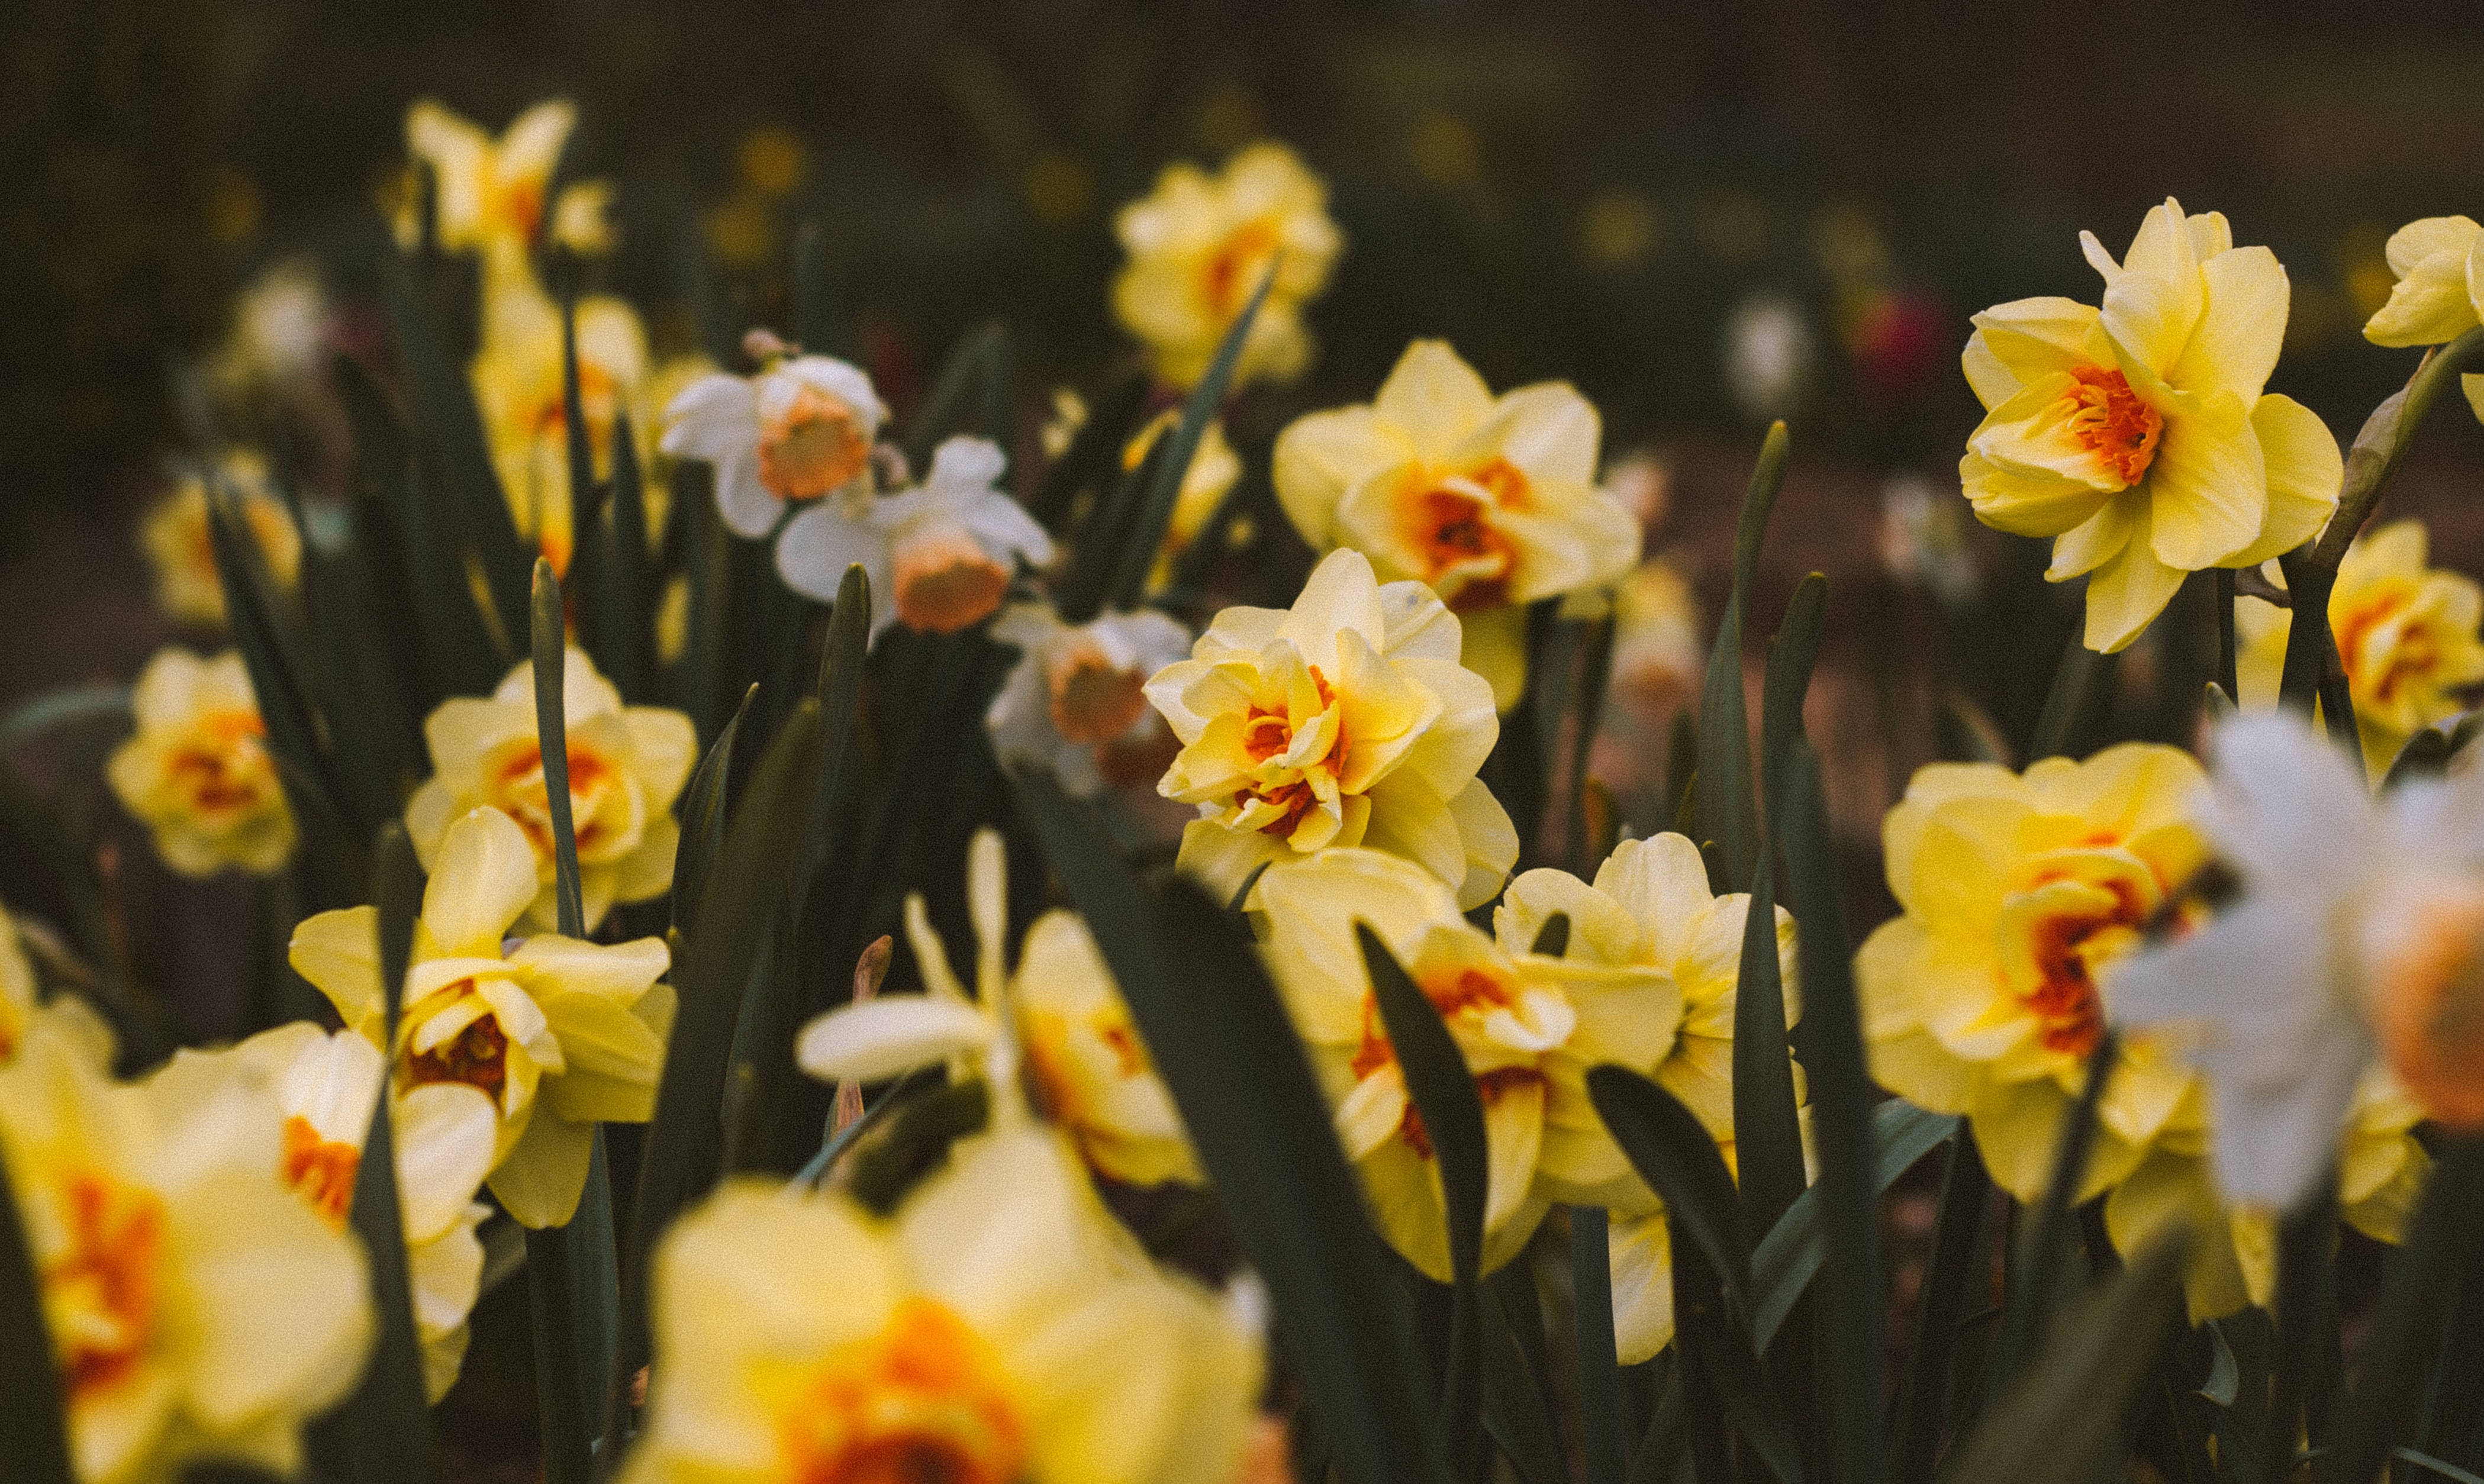 Daffodils in bloom British springtime